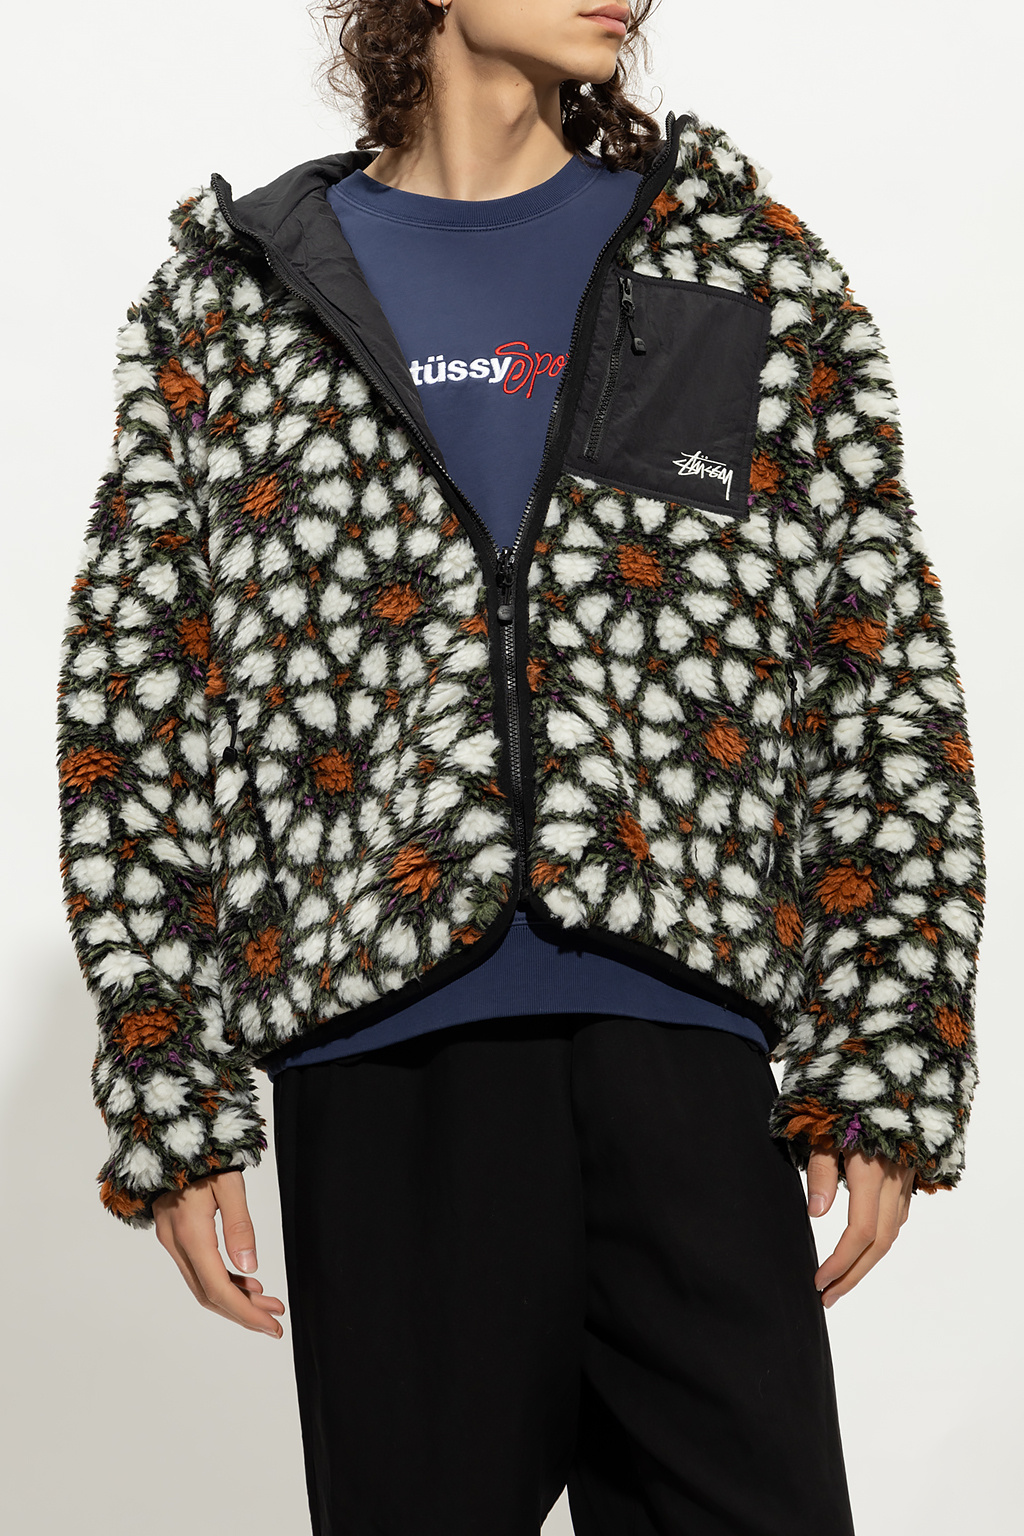 Stussy blazer with peaked lapels msgm jacket